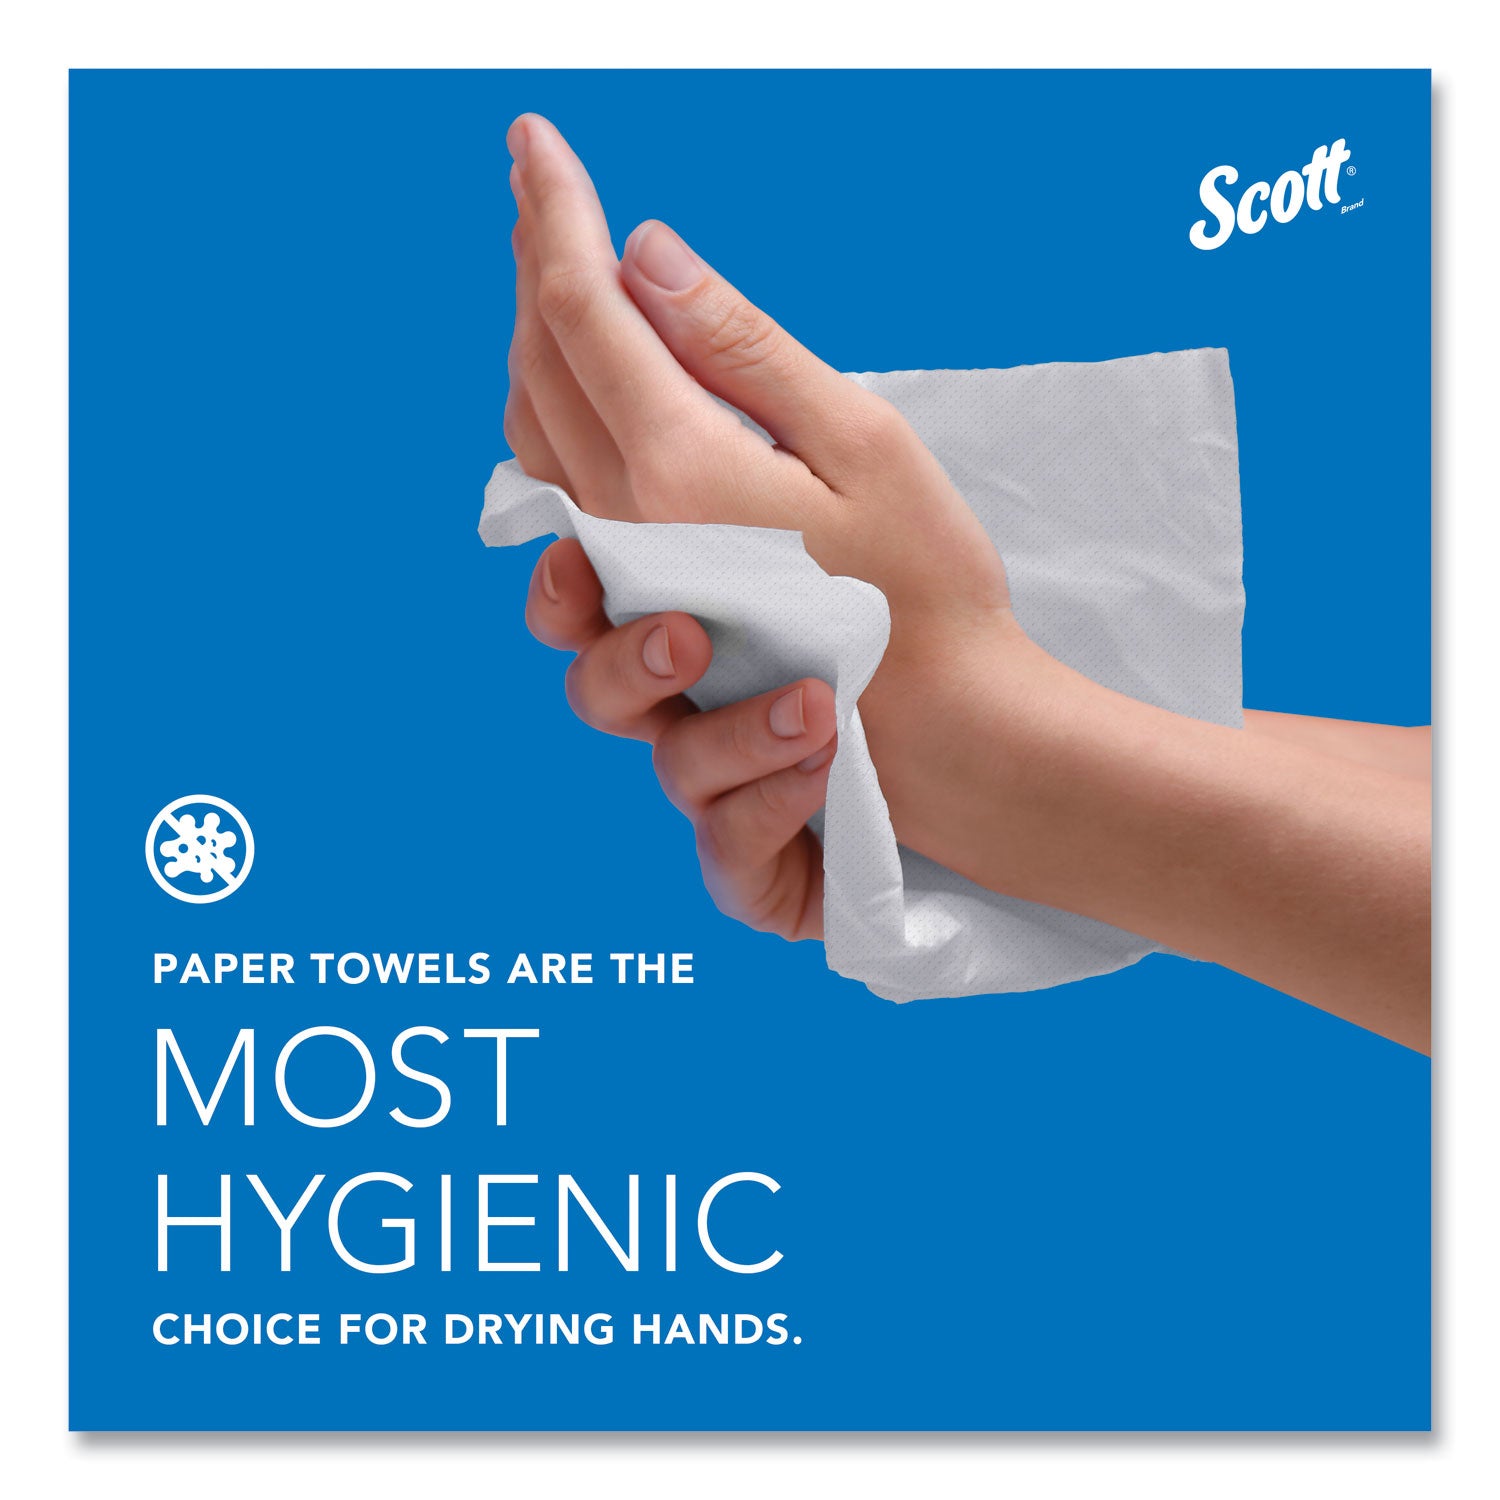 Pro Scottfold Towels, 1-Ply, 7.8 x 12.4, White, 175 Towels/Pack, 25 Packs/Carton - 